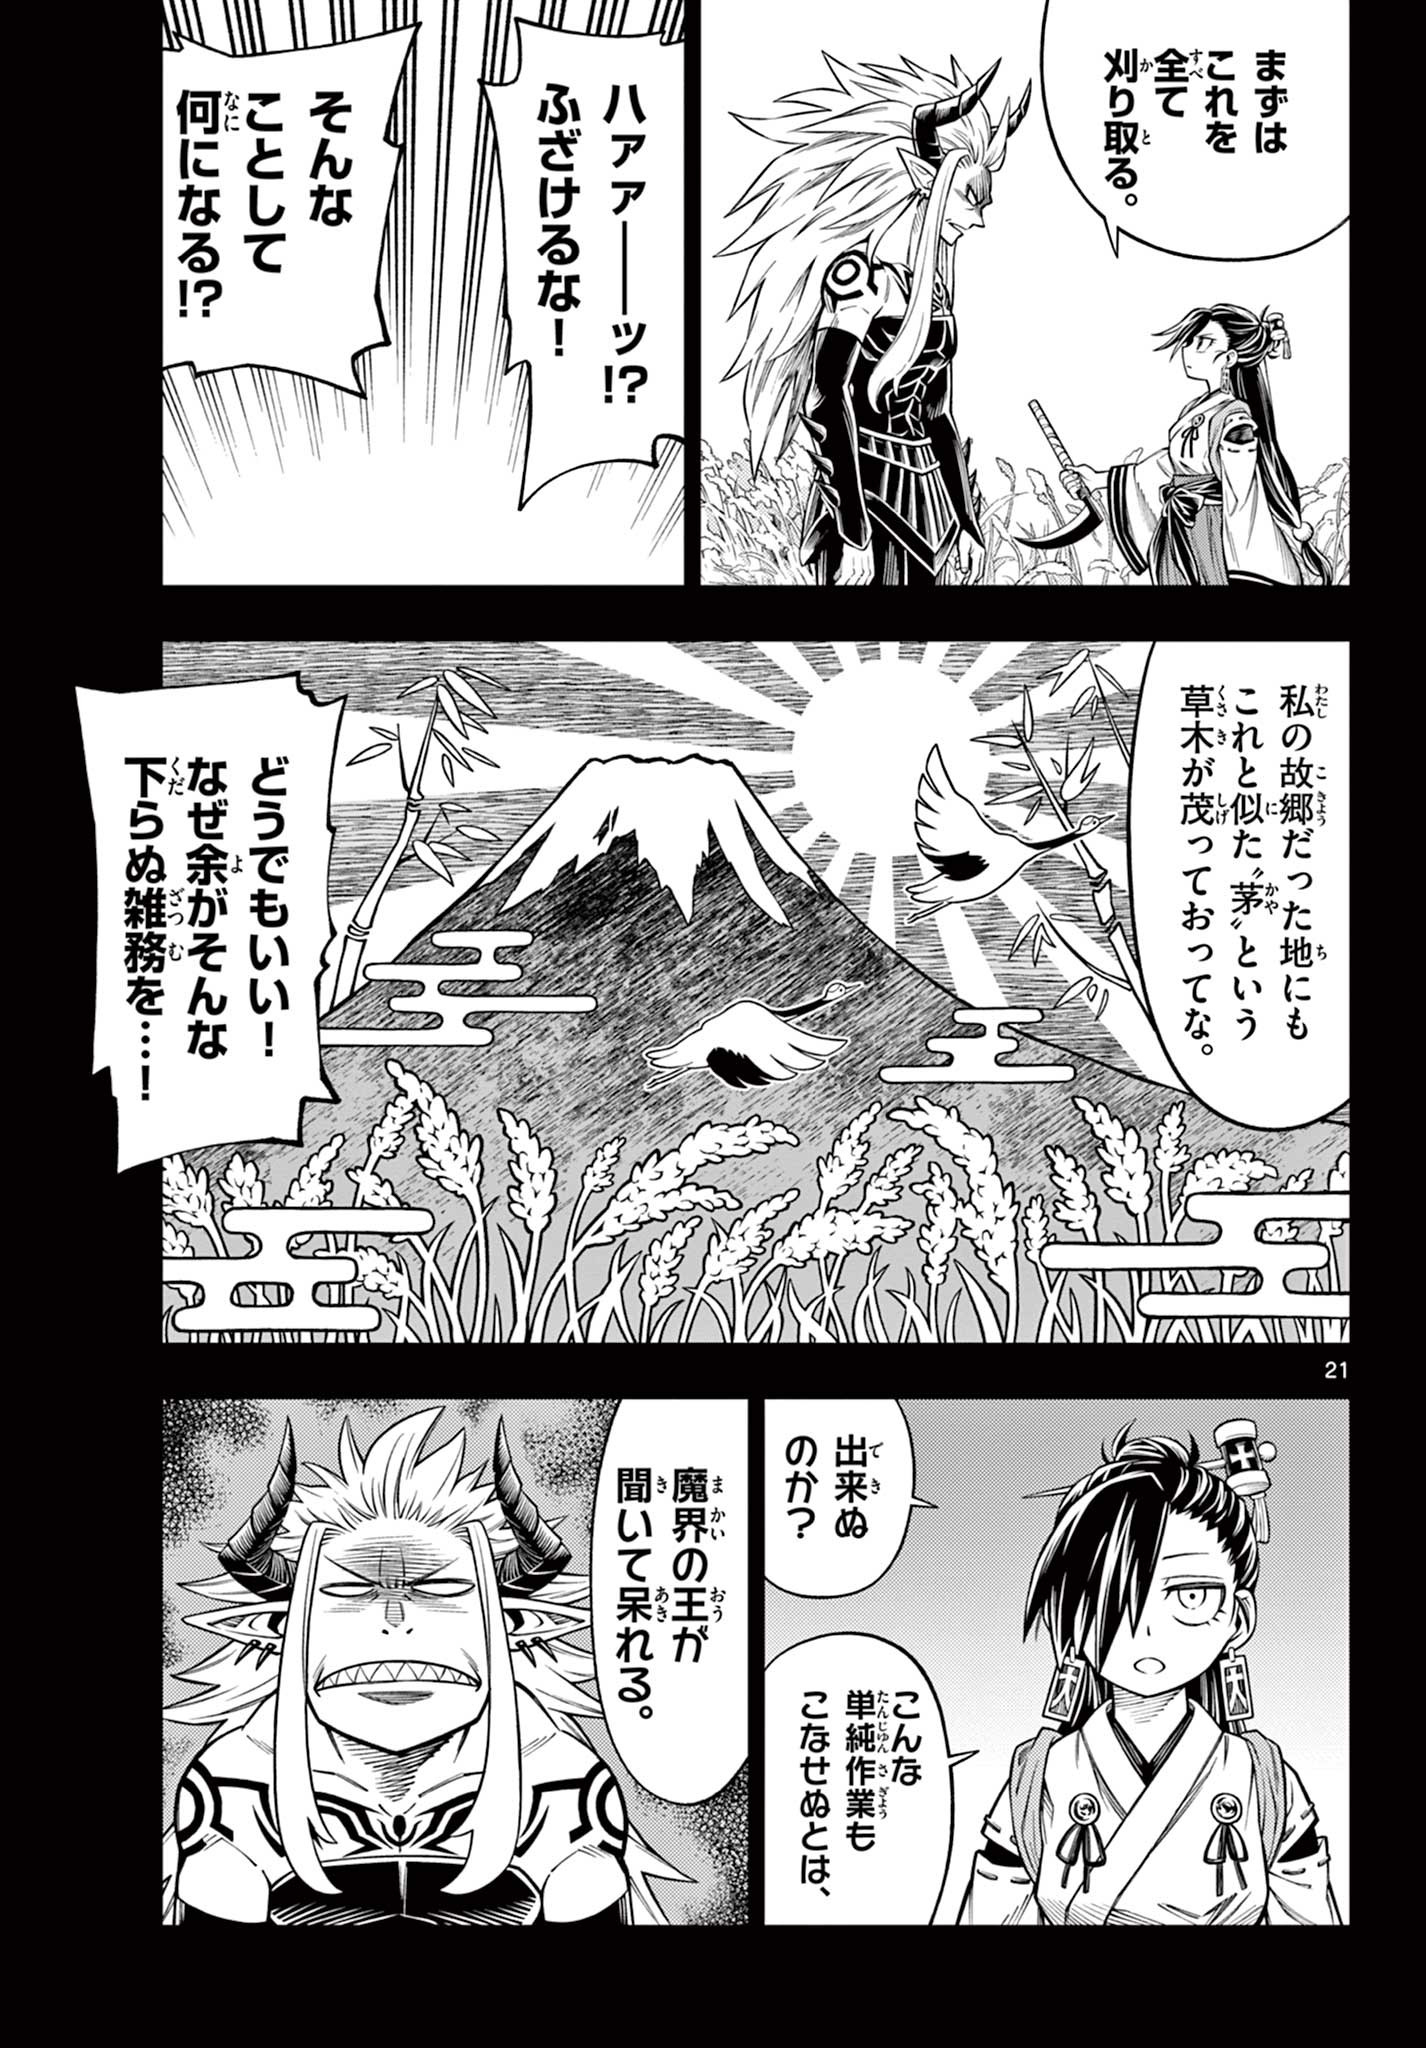 Soara to Mamono no ie - Chapter 10.1 - Page 21